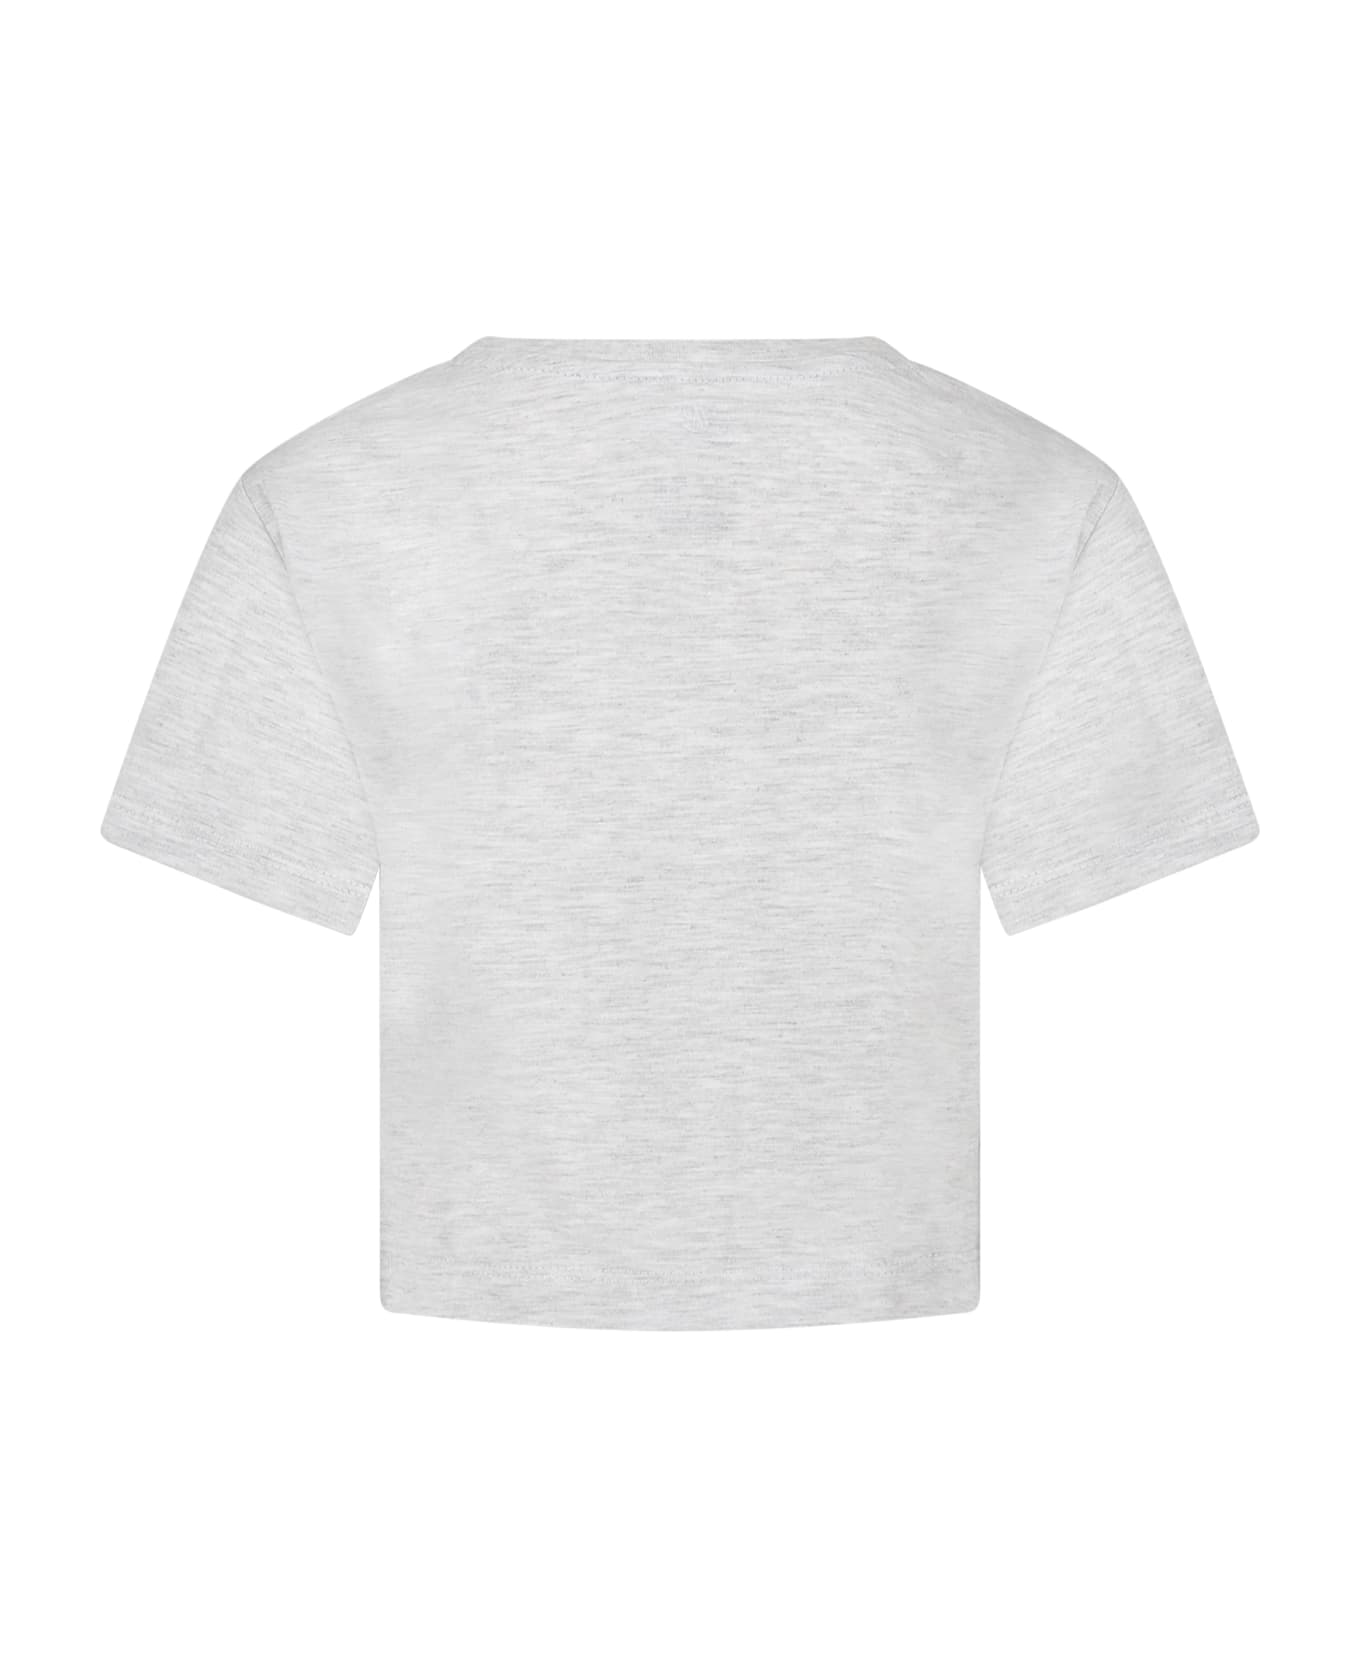 Nike Grey T-shirt Fot Girl With Logo - Grey Tシャツ＆ポロシャツ